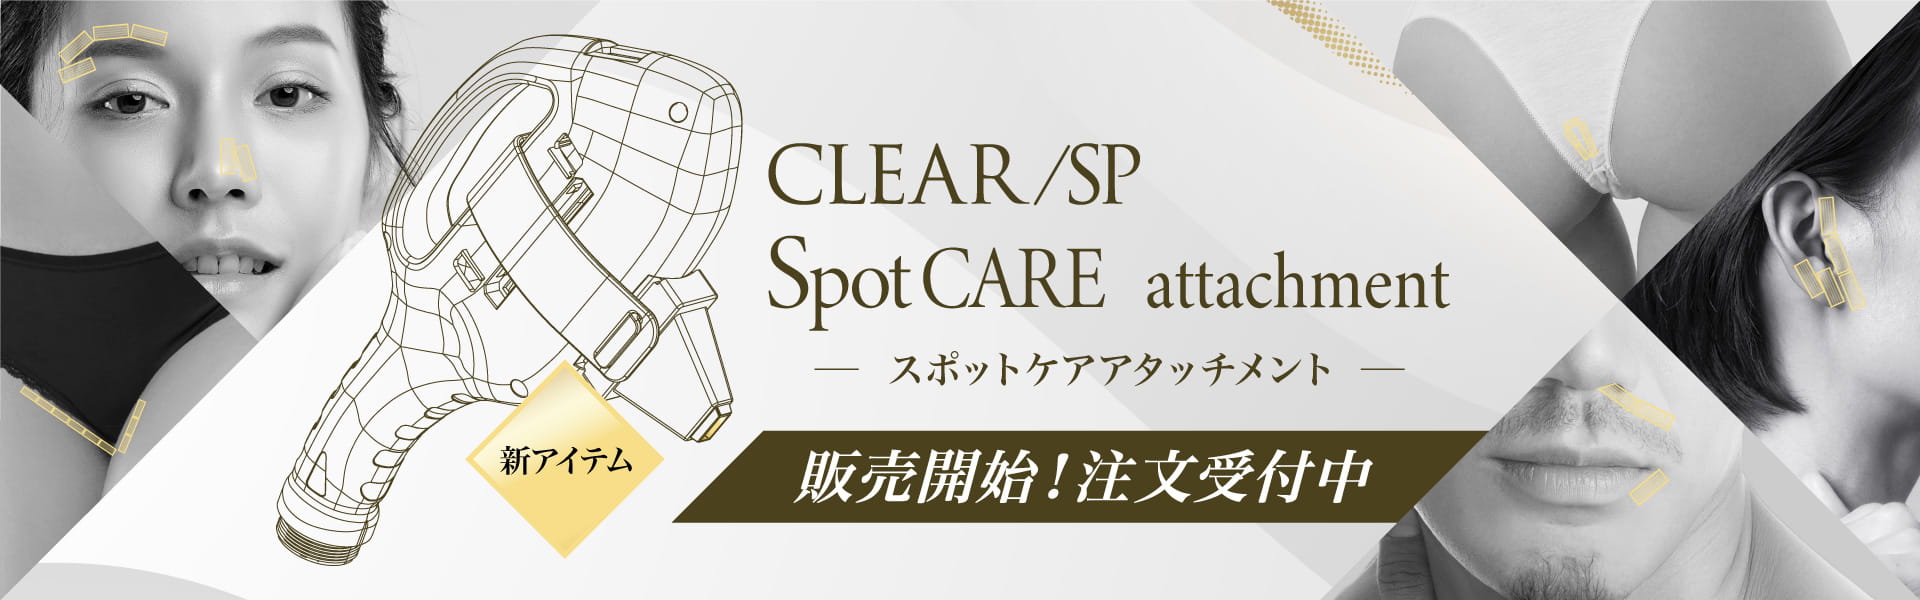 CLEAR/SP Spot CARE attachment スポットケアアタッチメント